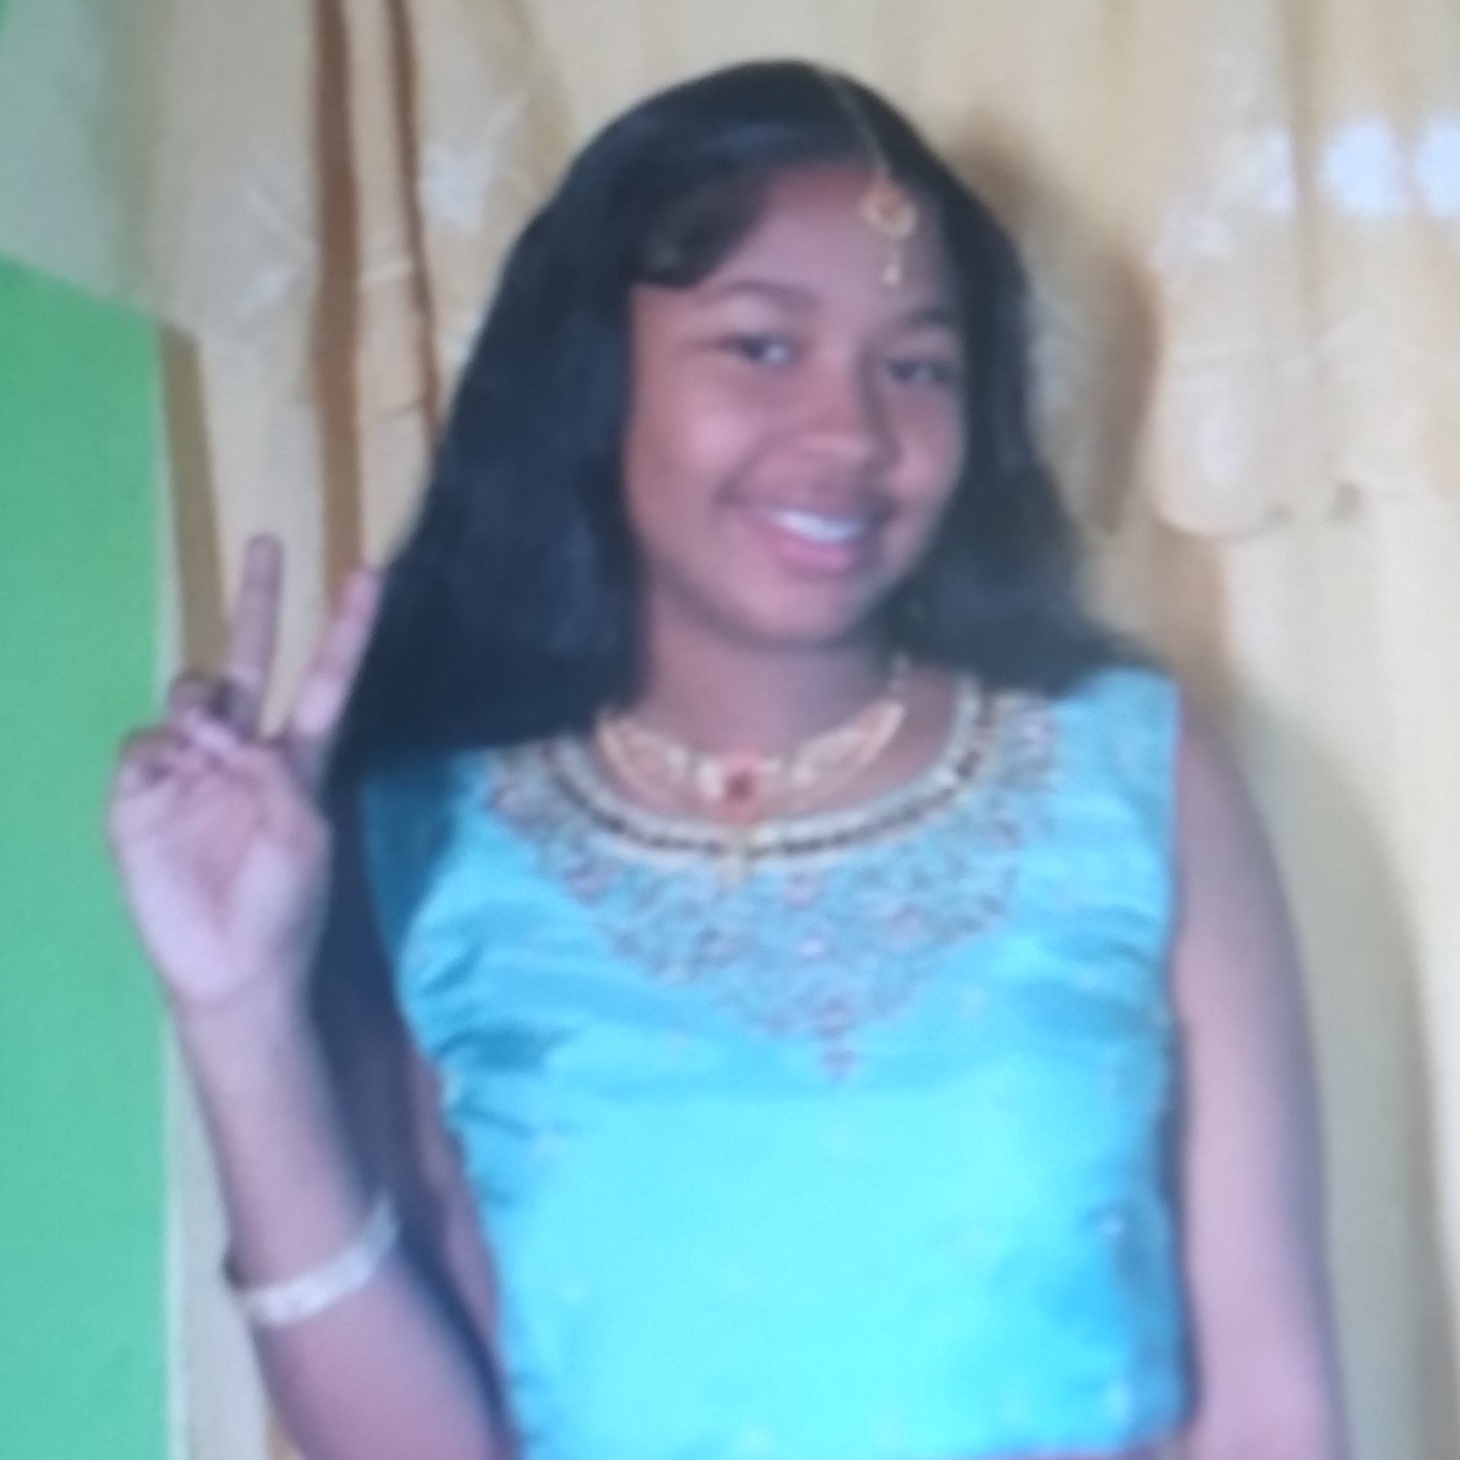 16 Year Old Sadbiuyah Blair Of Cocorite, St. James, Missing